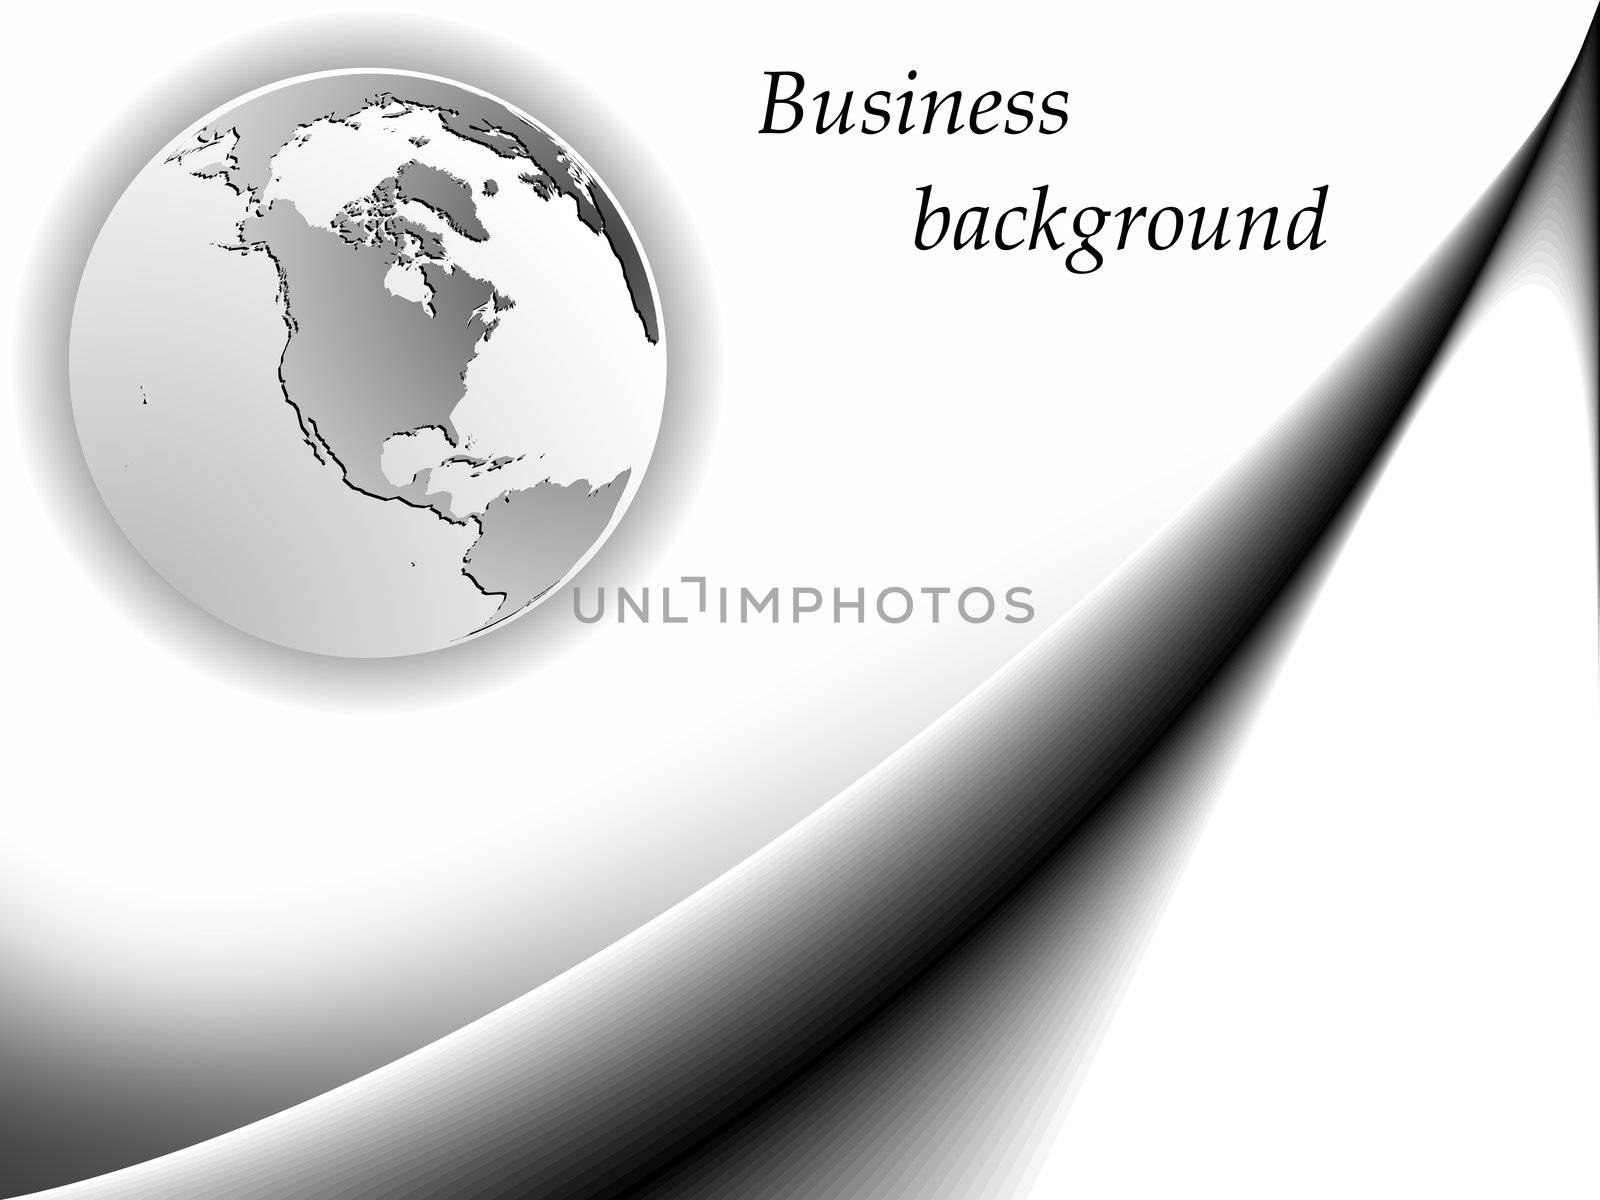 business background 1 by robertosch